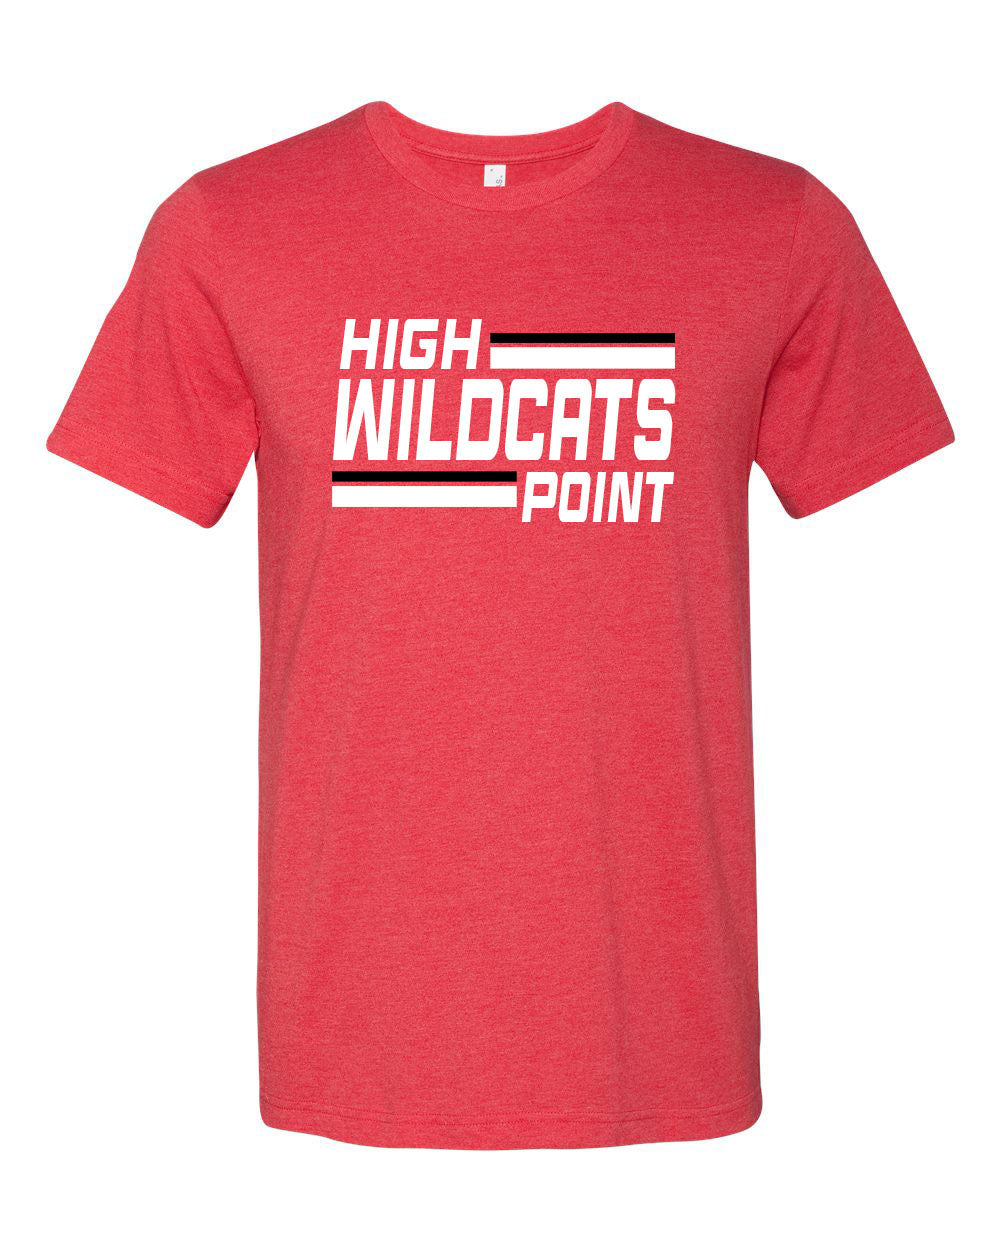 Wildcats Cheer design 4 T-Shirt